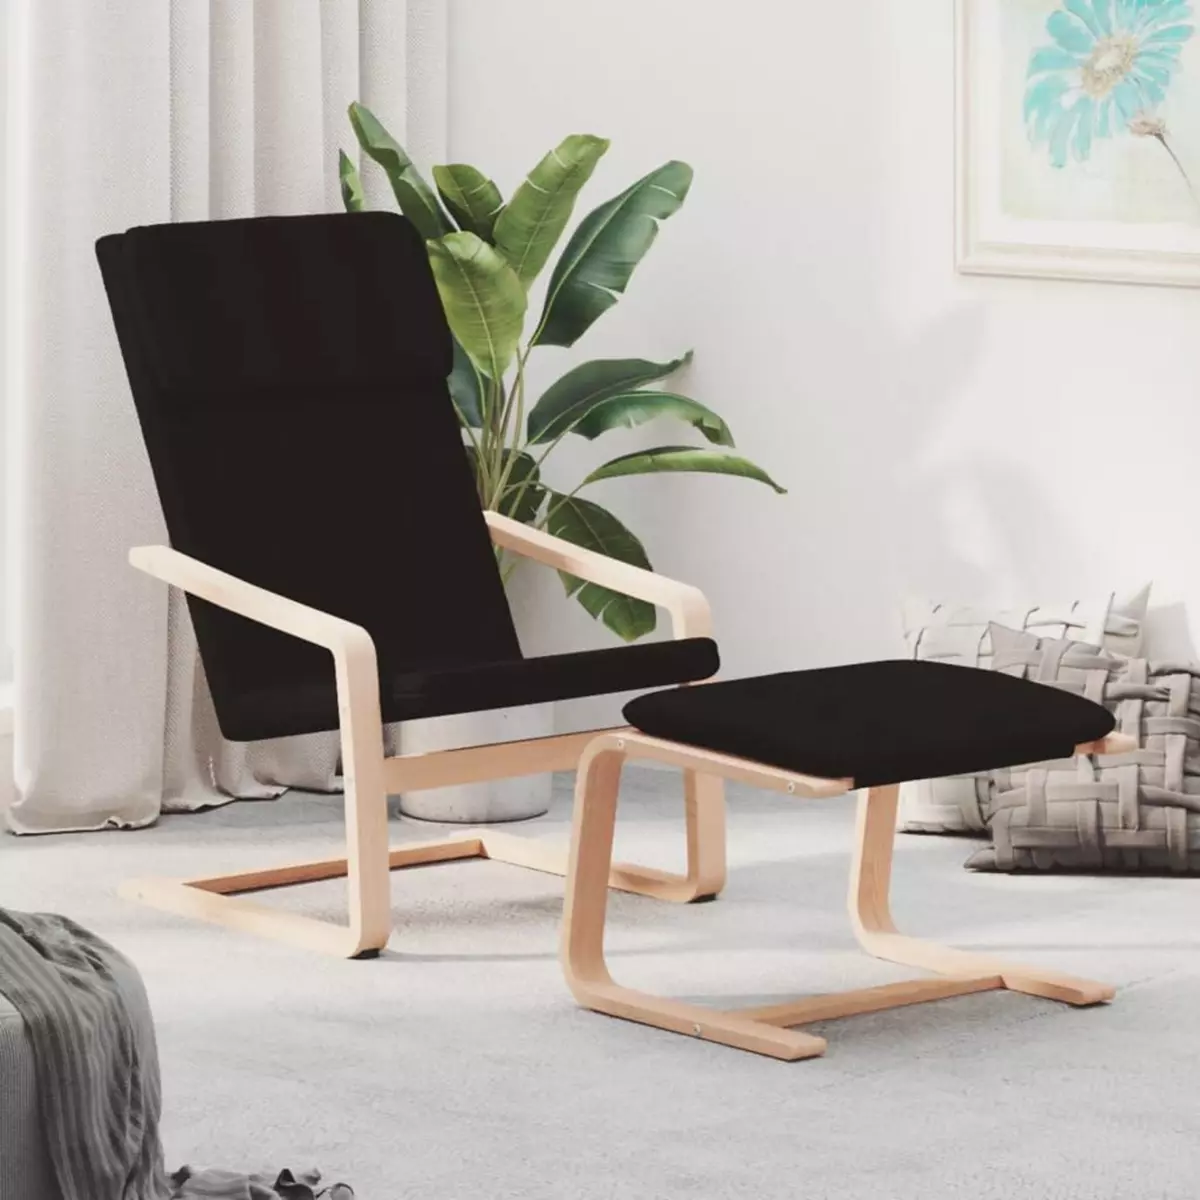 VIDAXL Chaise de relaxation avec repose-pied Noir Tissu